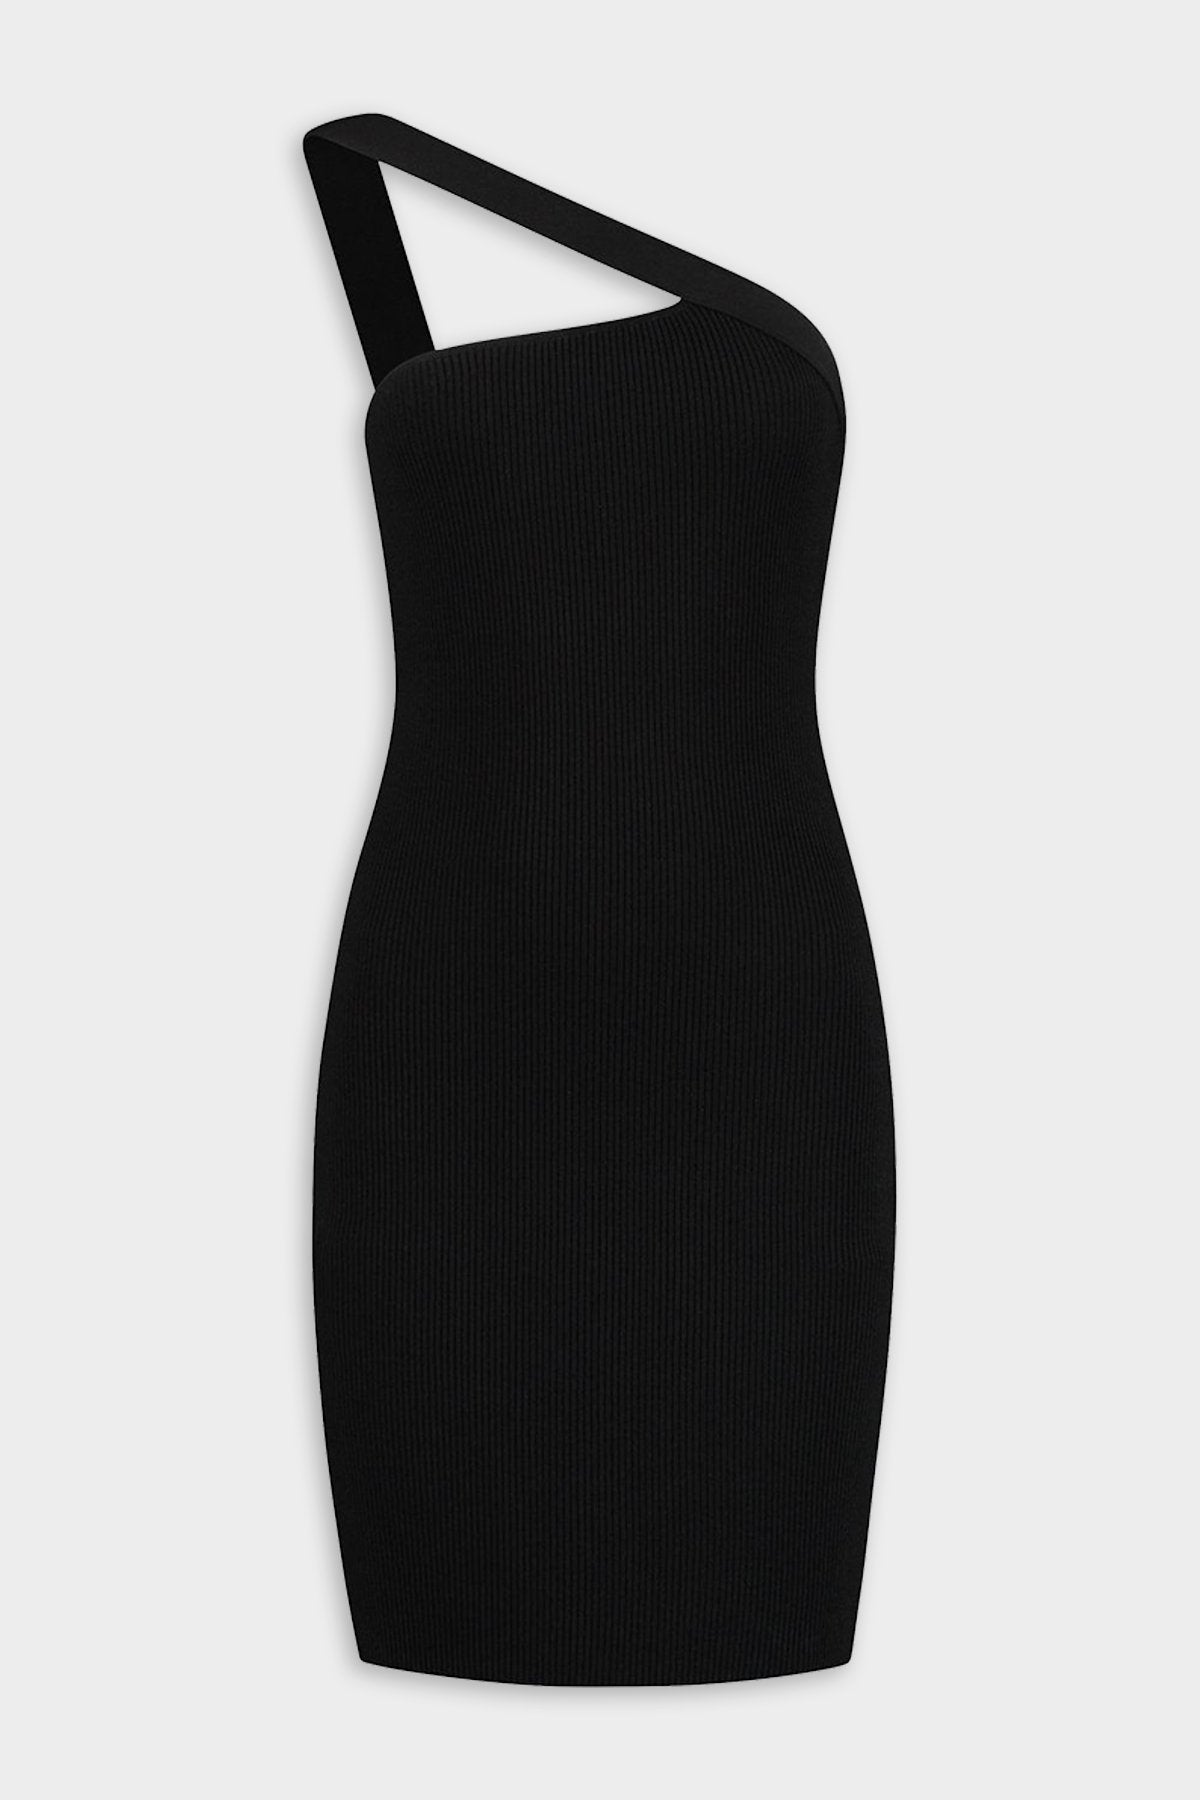 Soria Knit Mini Dress in Black - shop-olivia.com